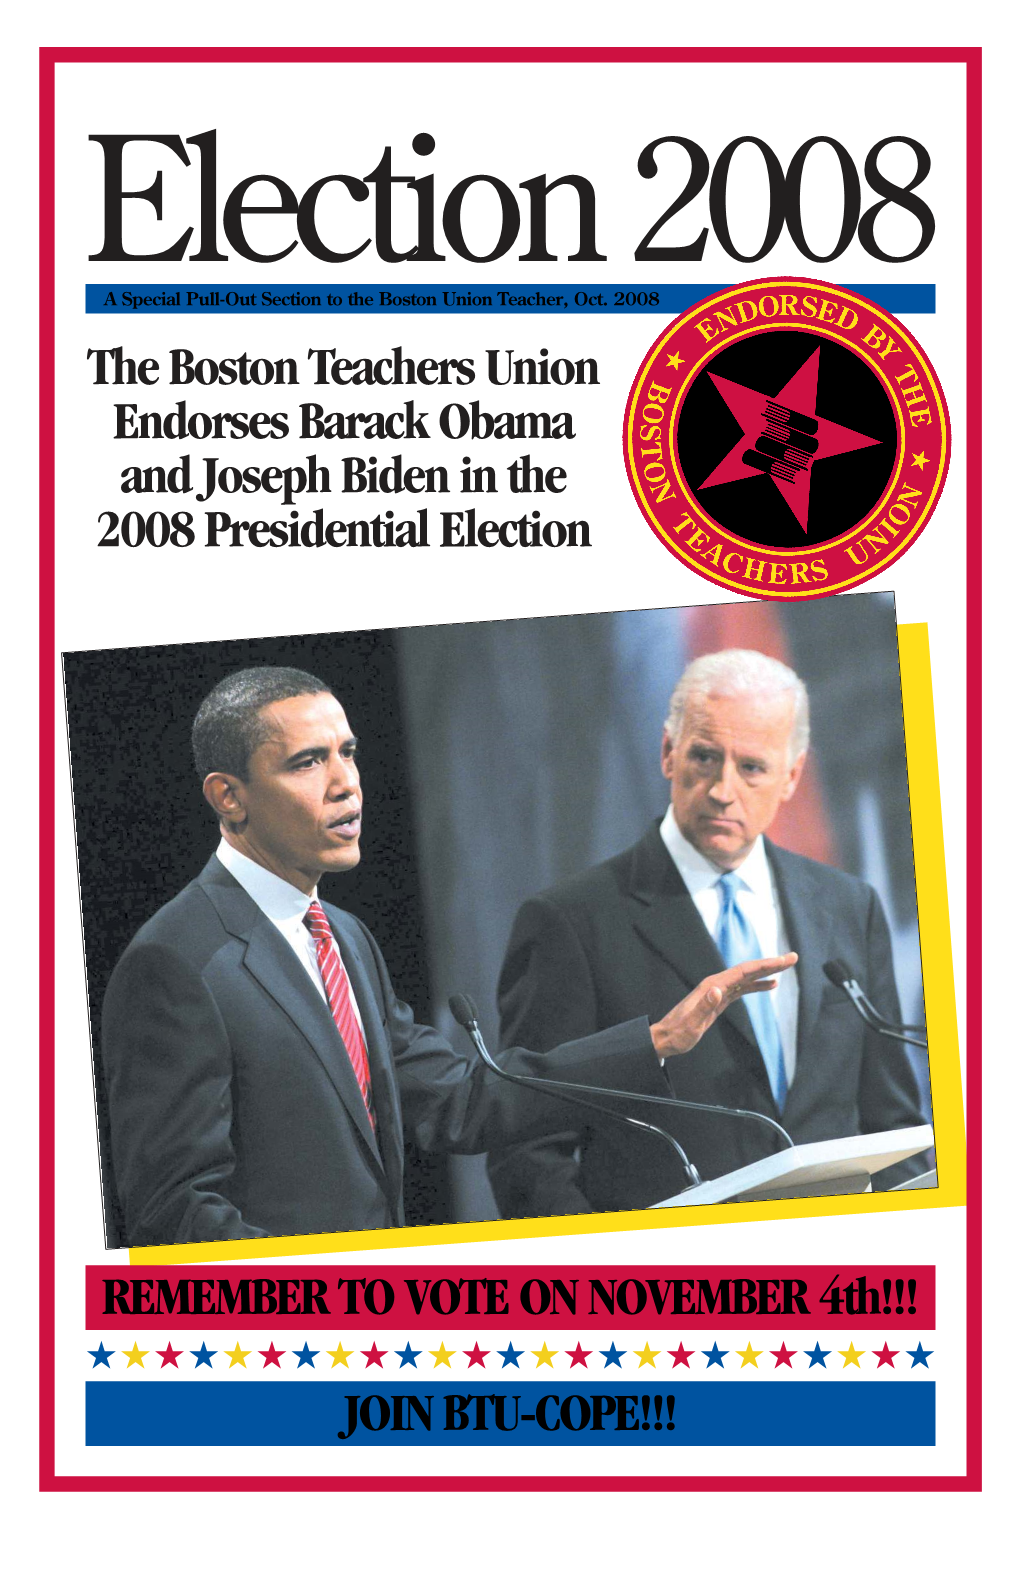 The Boston Teachers Union Endorses Barack Obama and Joseph Biden in the 2008 Presidential Election